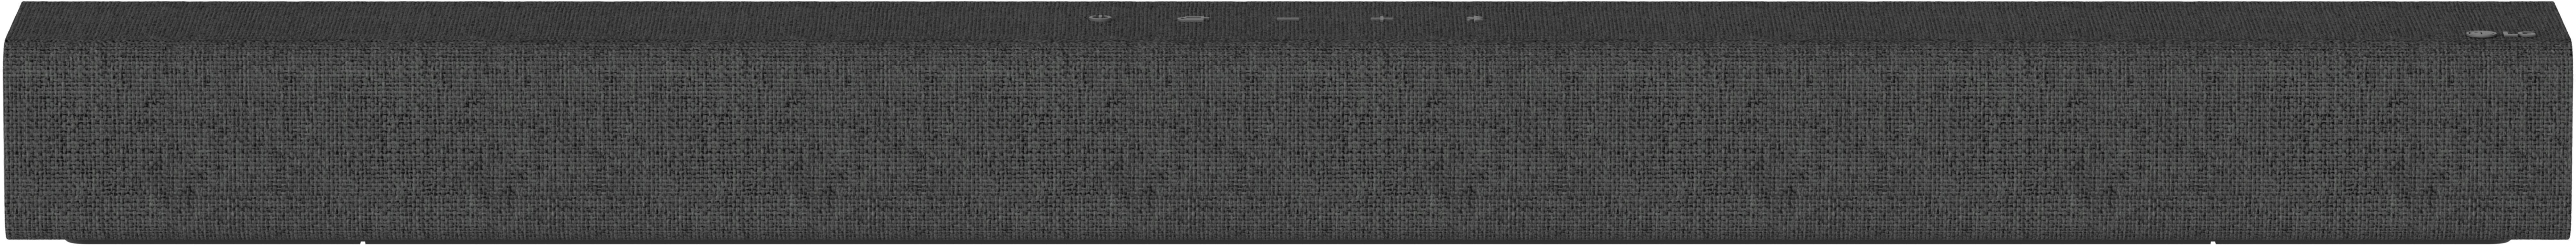 LG DSP2, Grey Dark Soundbar